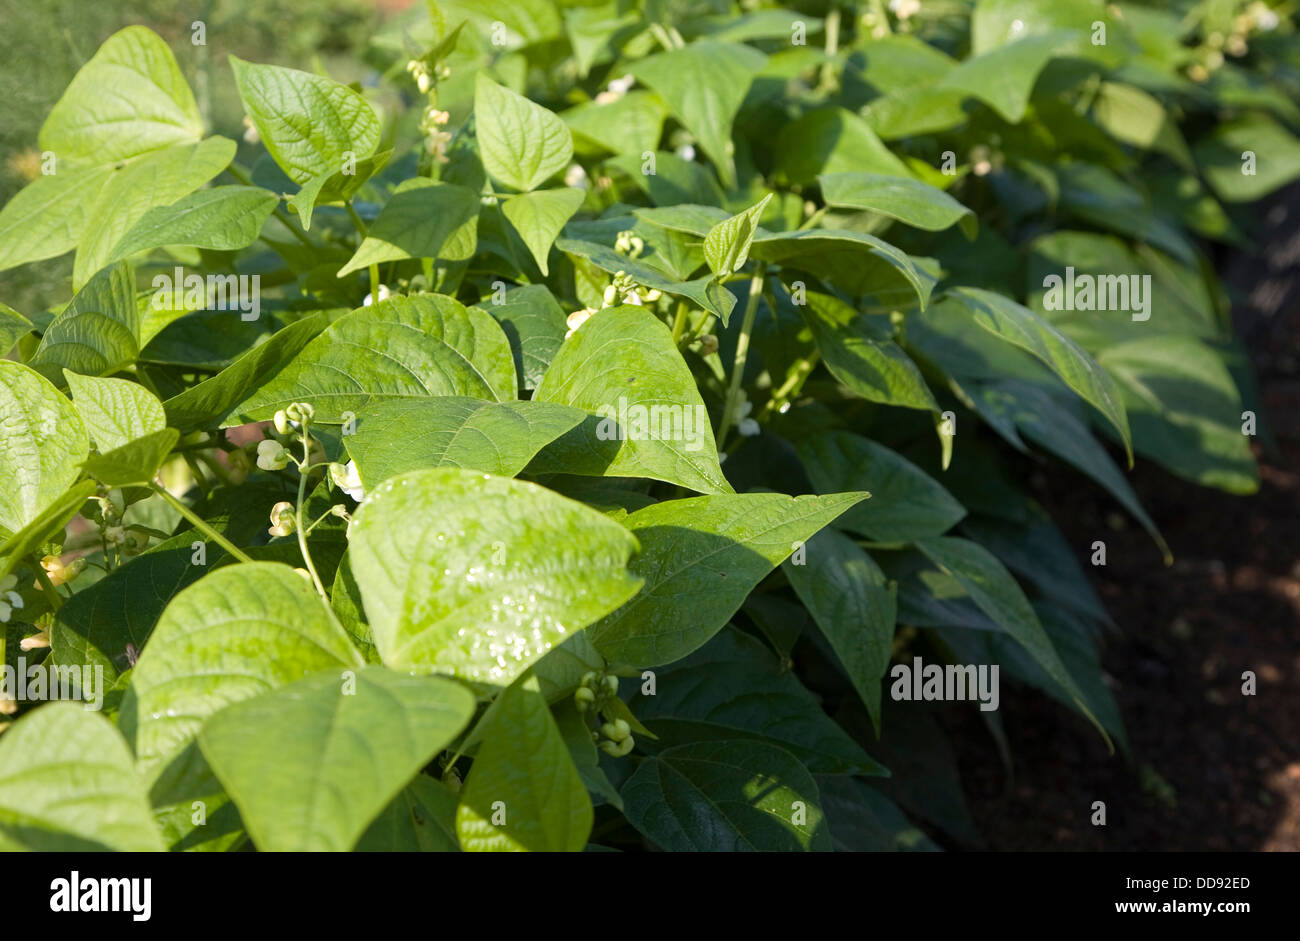 Dwarf beans growing Stock Photo